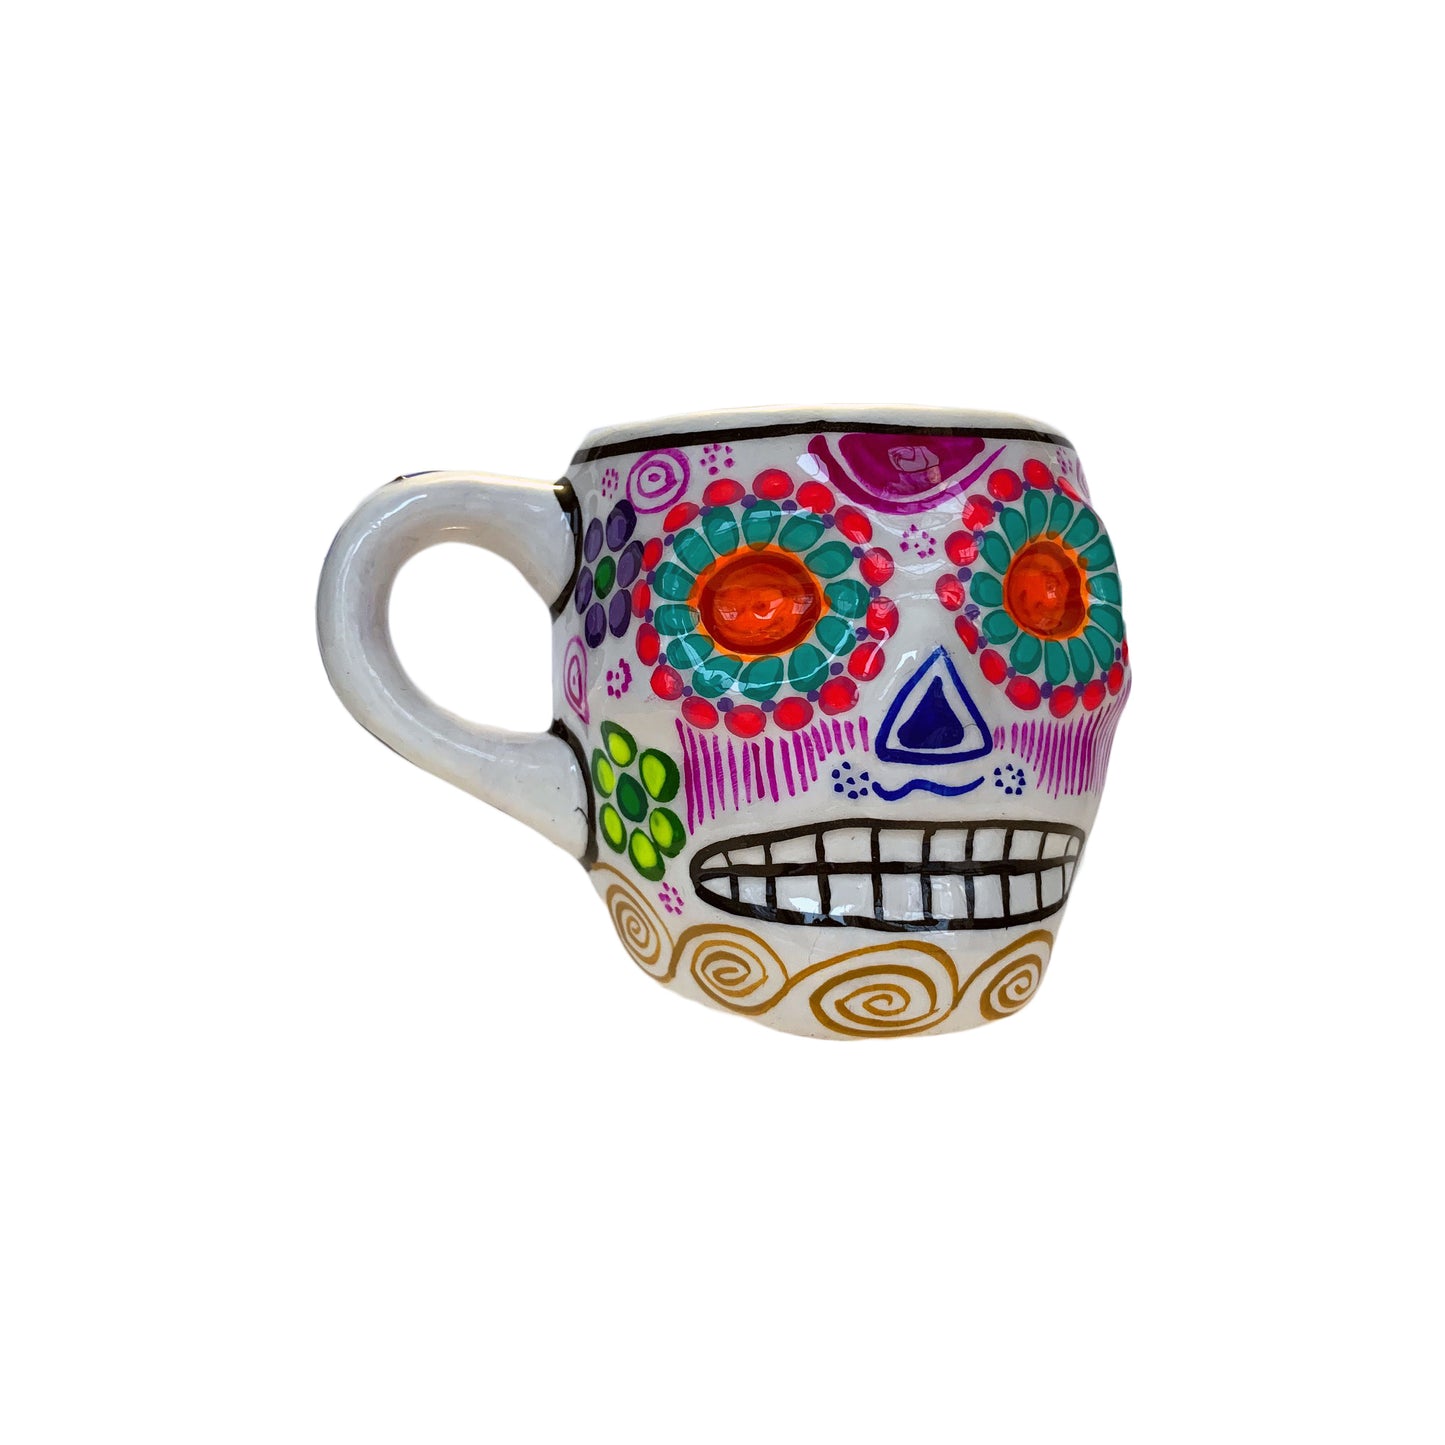 Hand Painted Sugar Skull Coffee Mug  - 10 oz capacity (Made in Mexico)